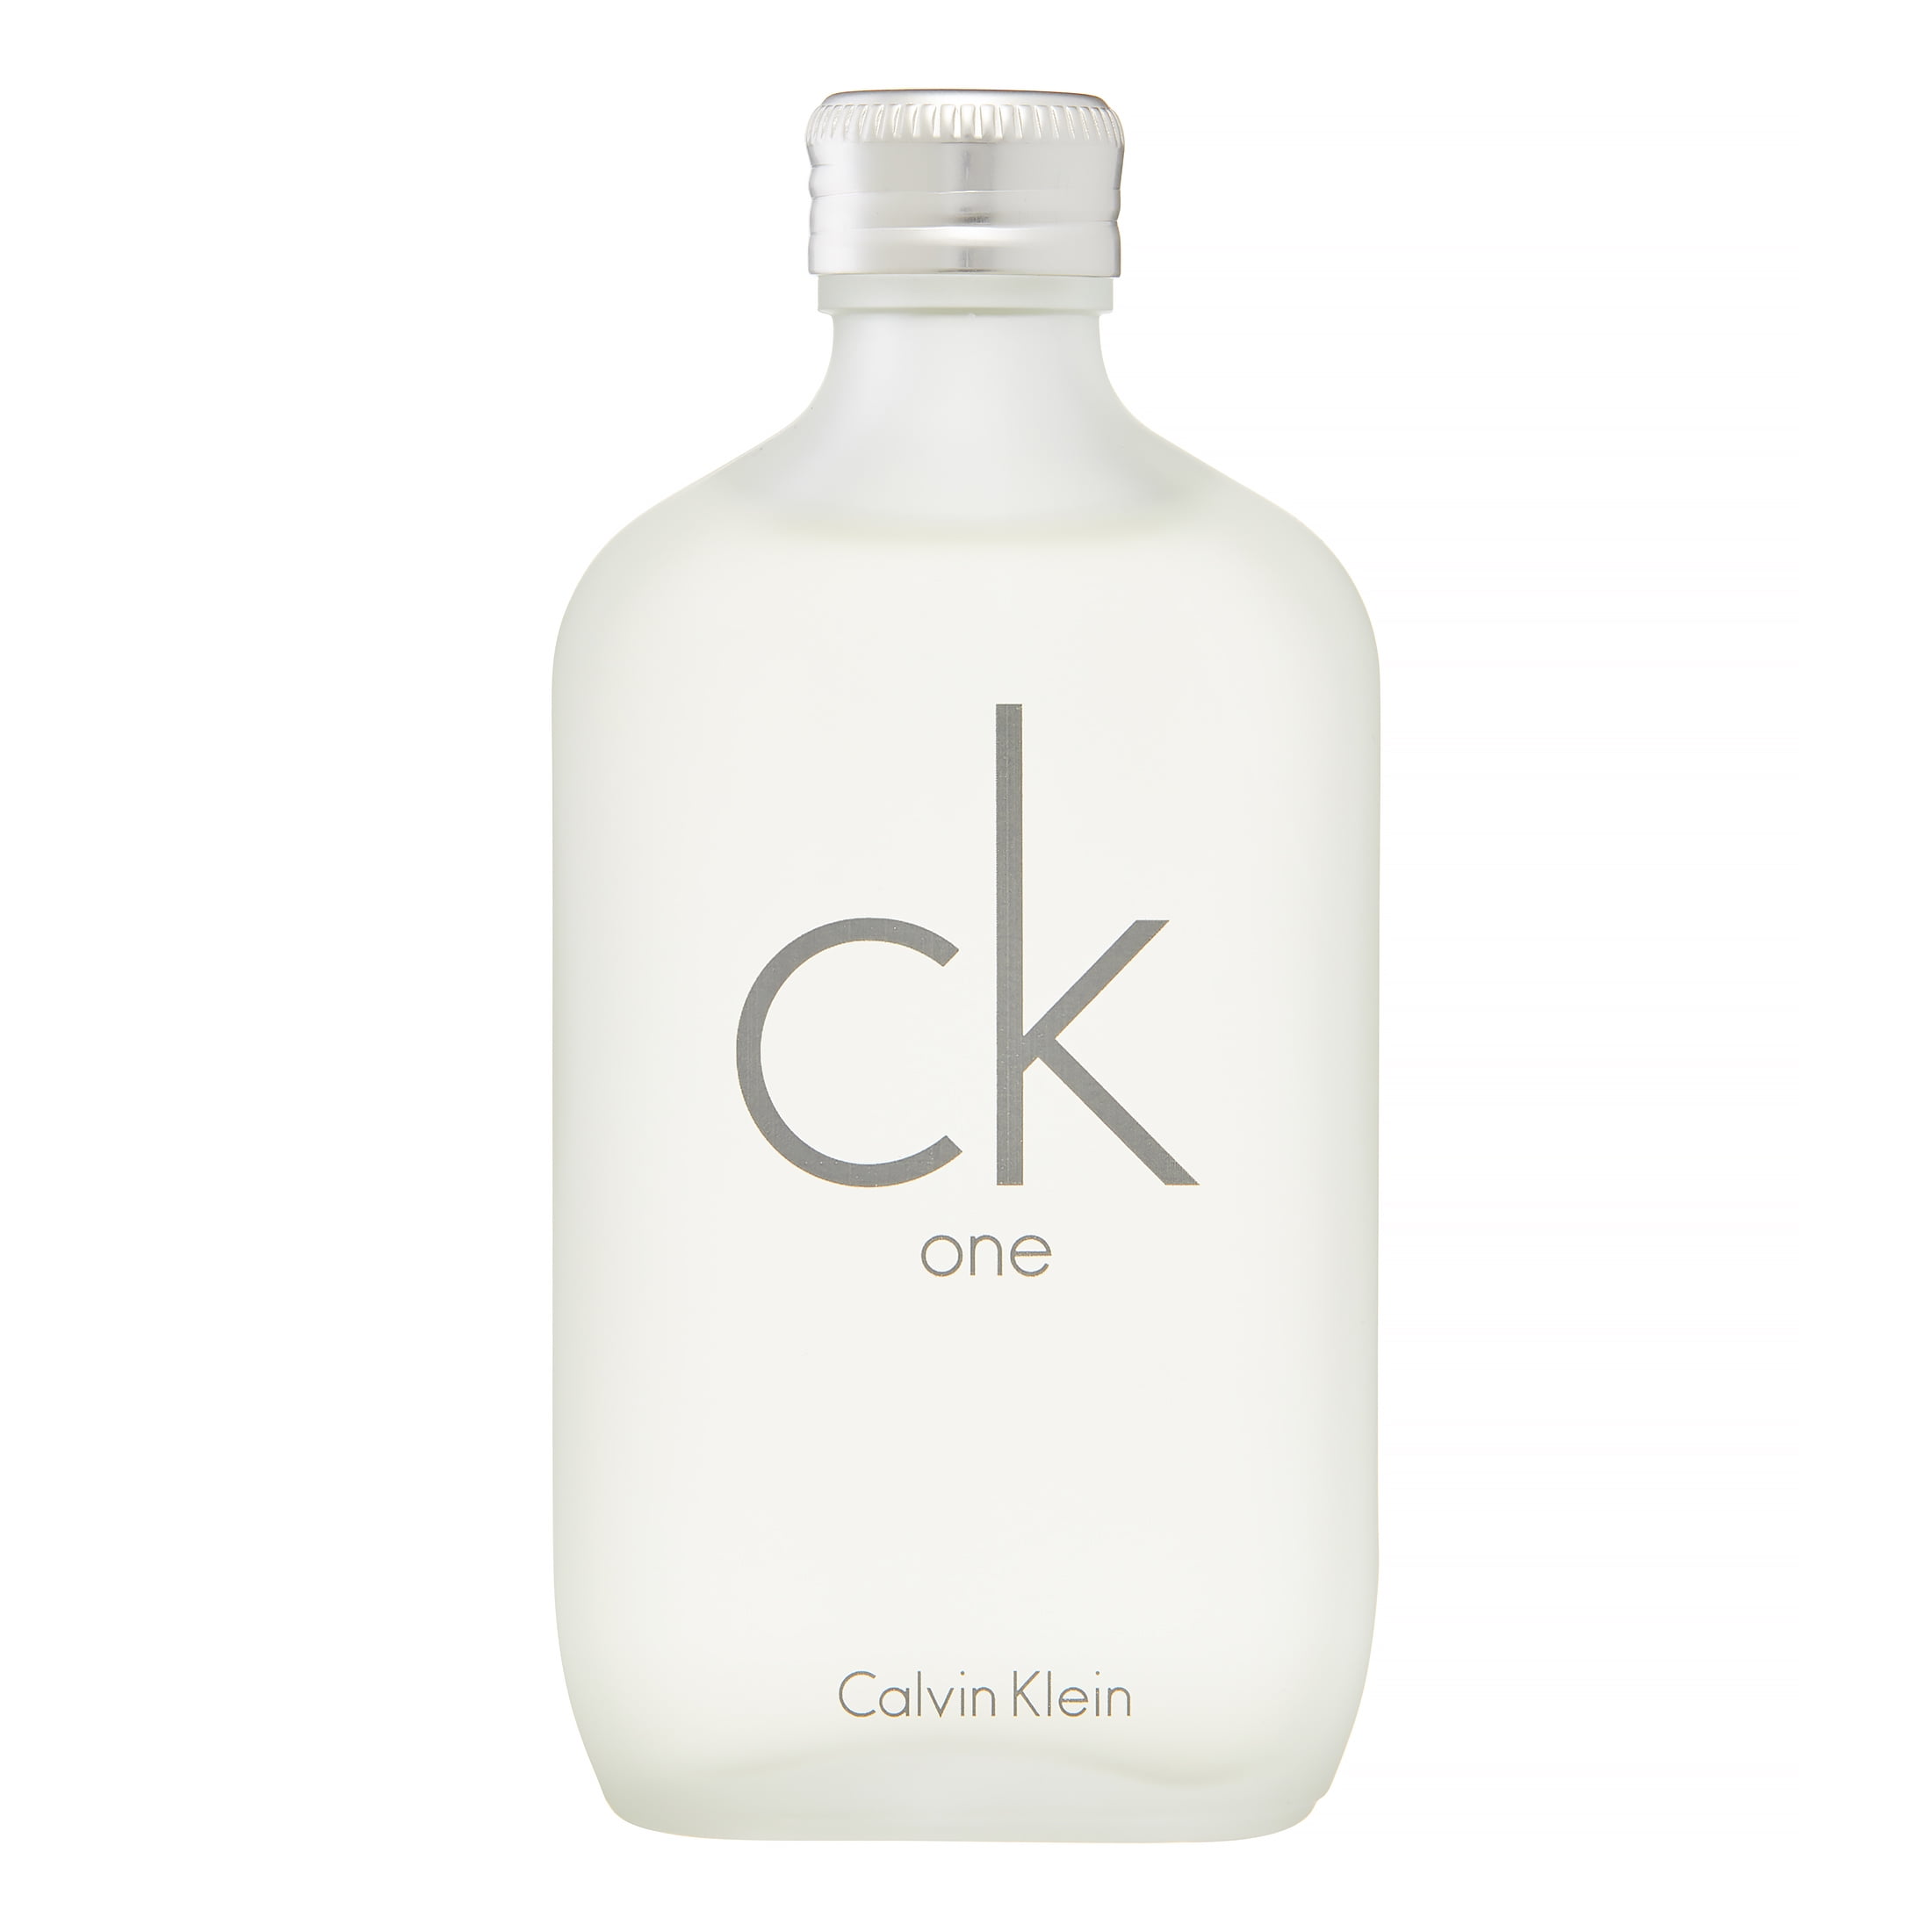 Calvin Klein CK One Eau De Toilette, Unisex Perfume, 3.4 Oz